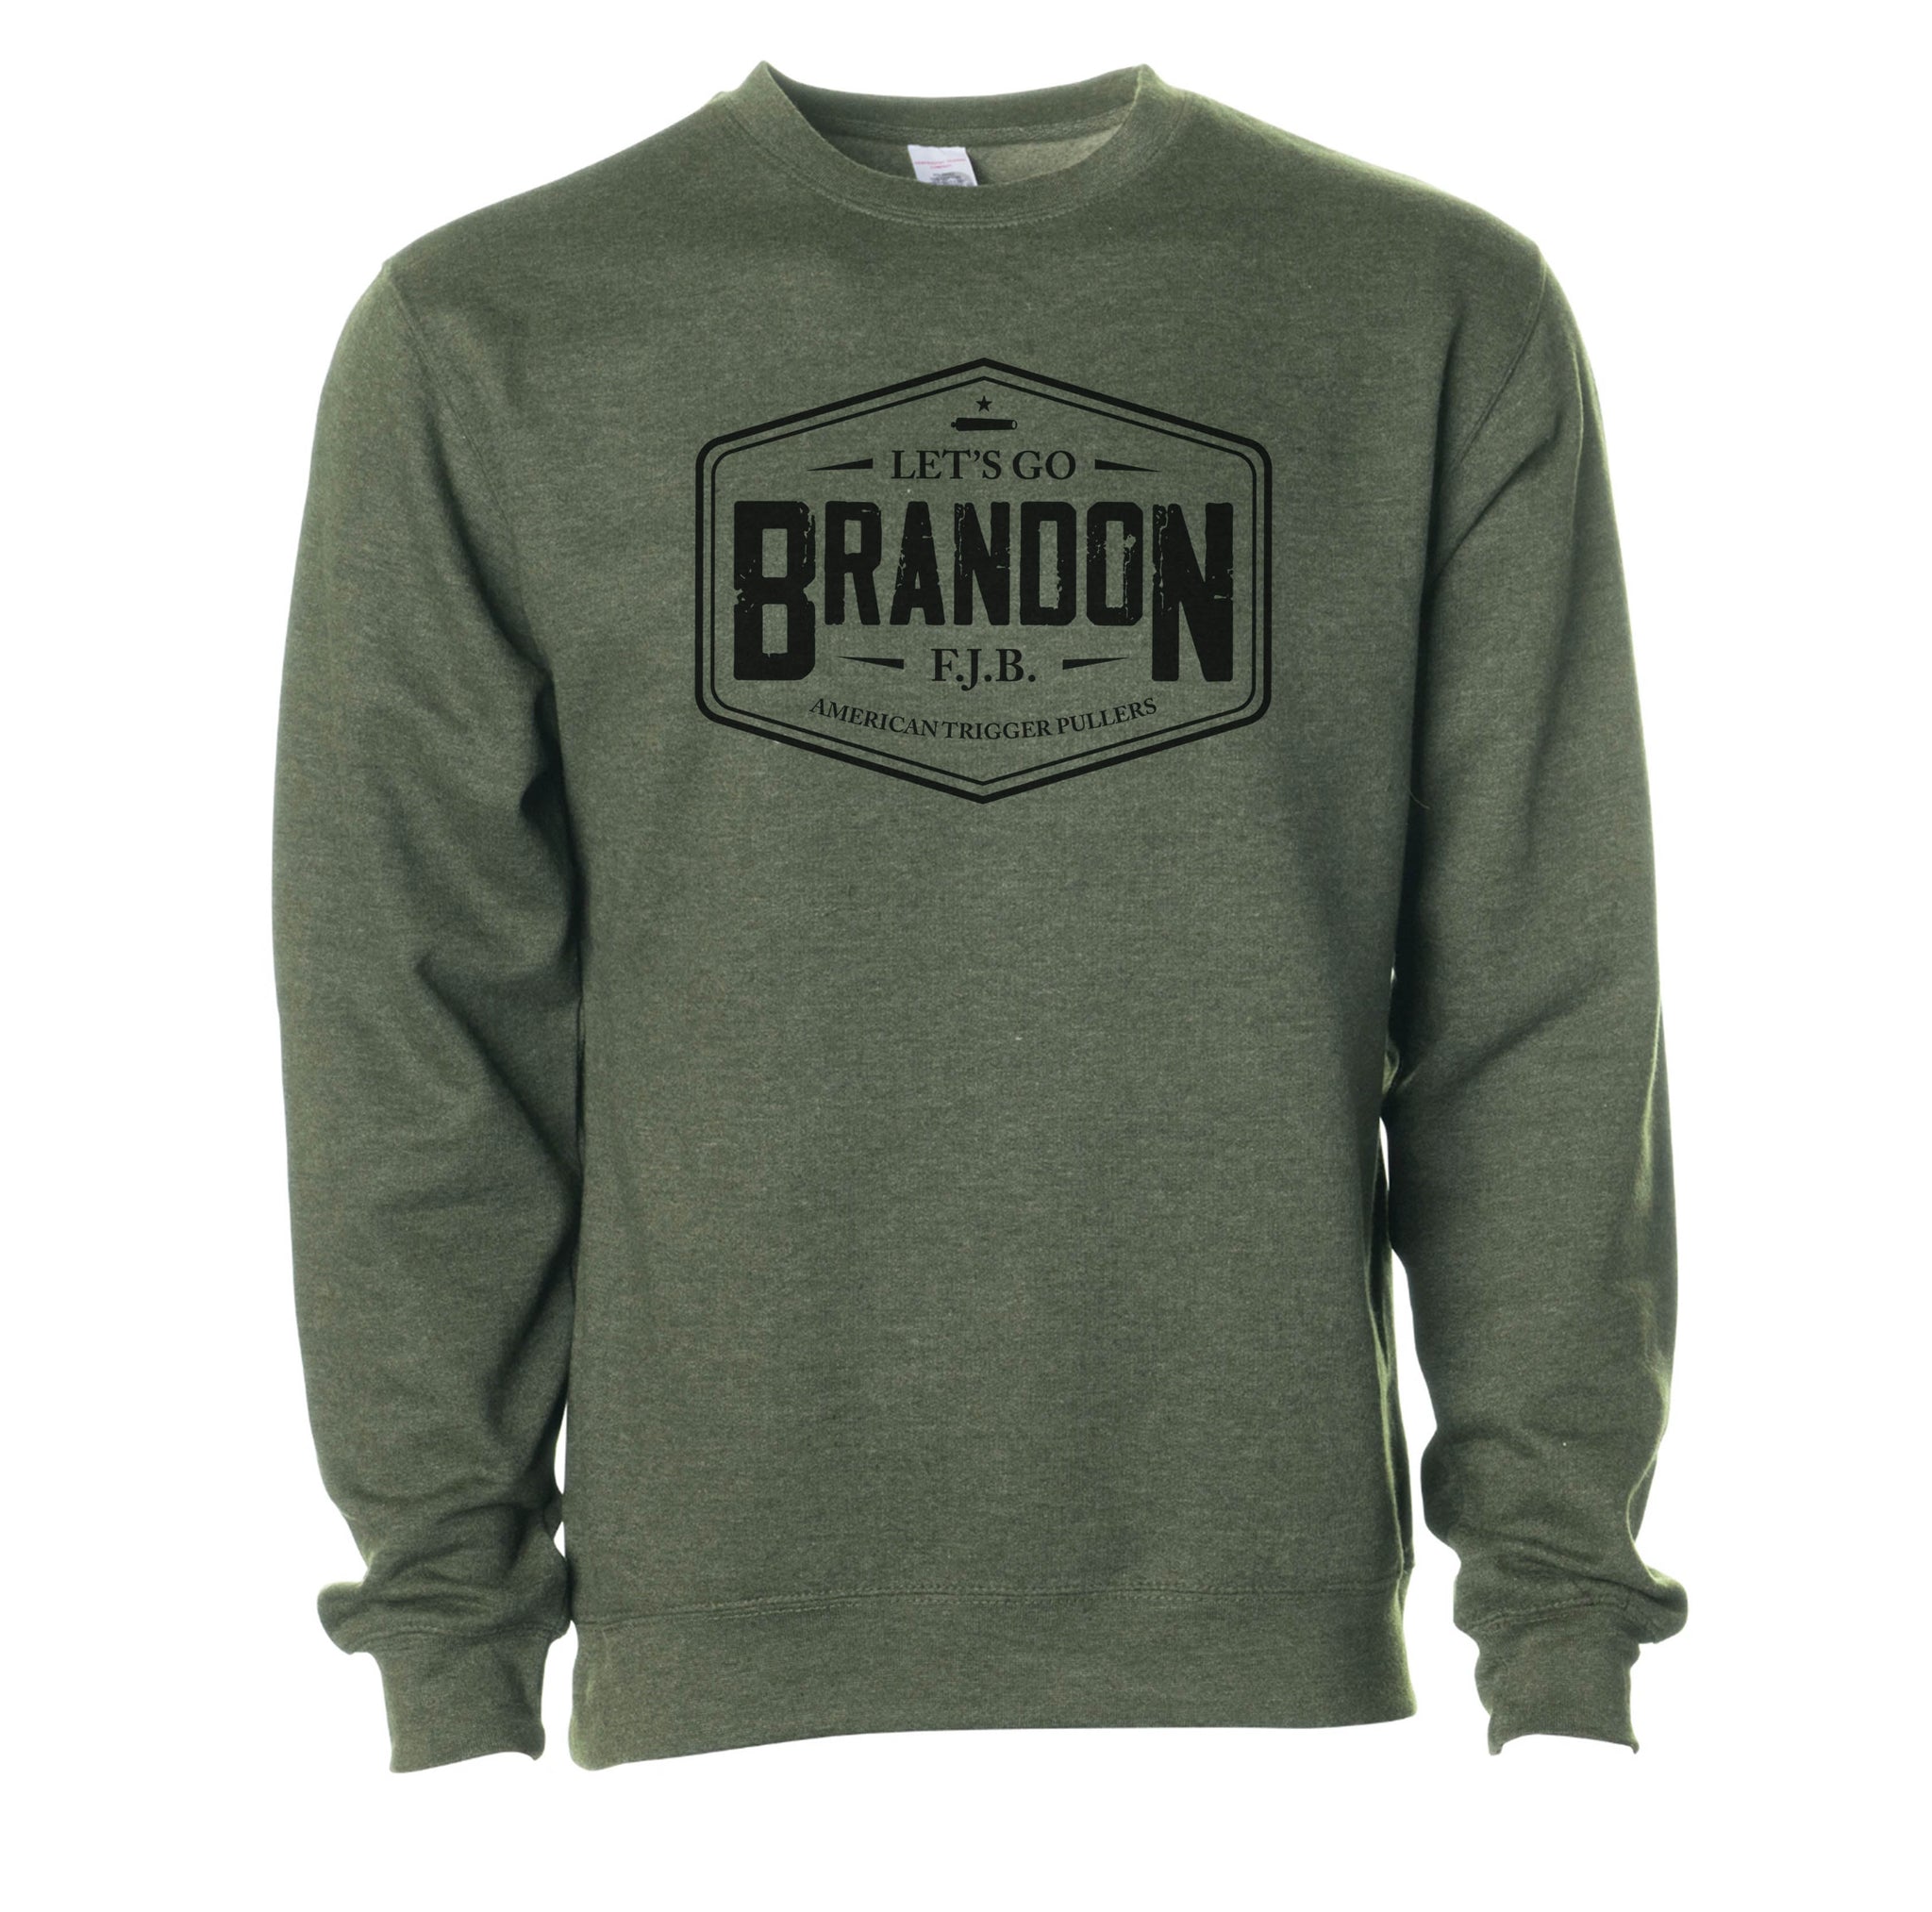 Let's Go Brandon Sweat Shirt